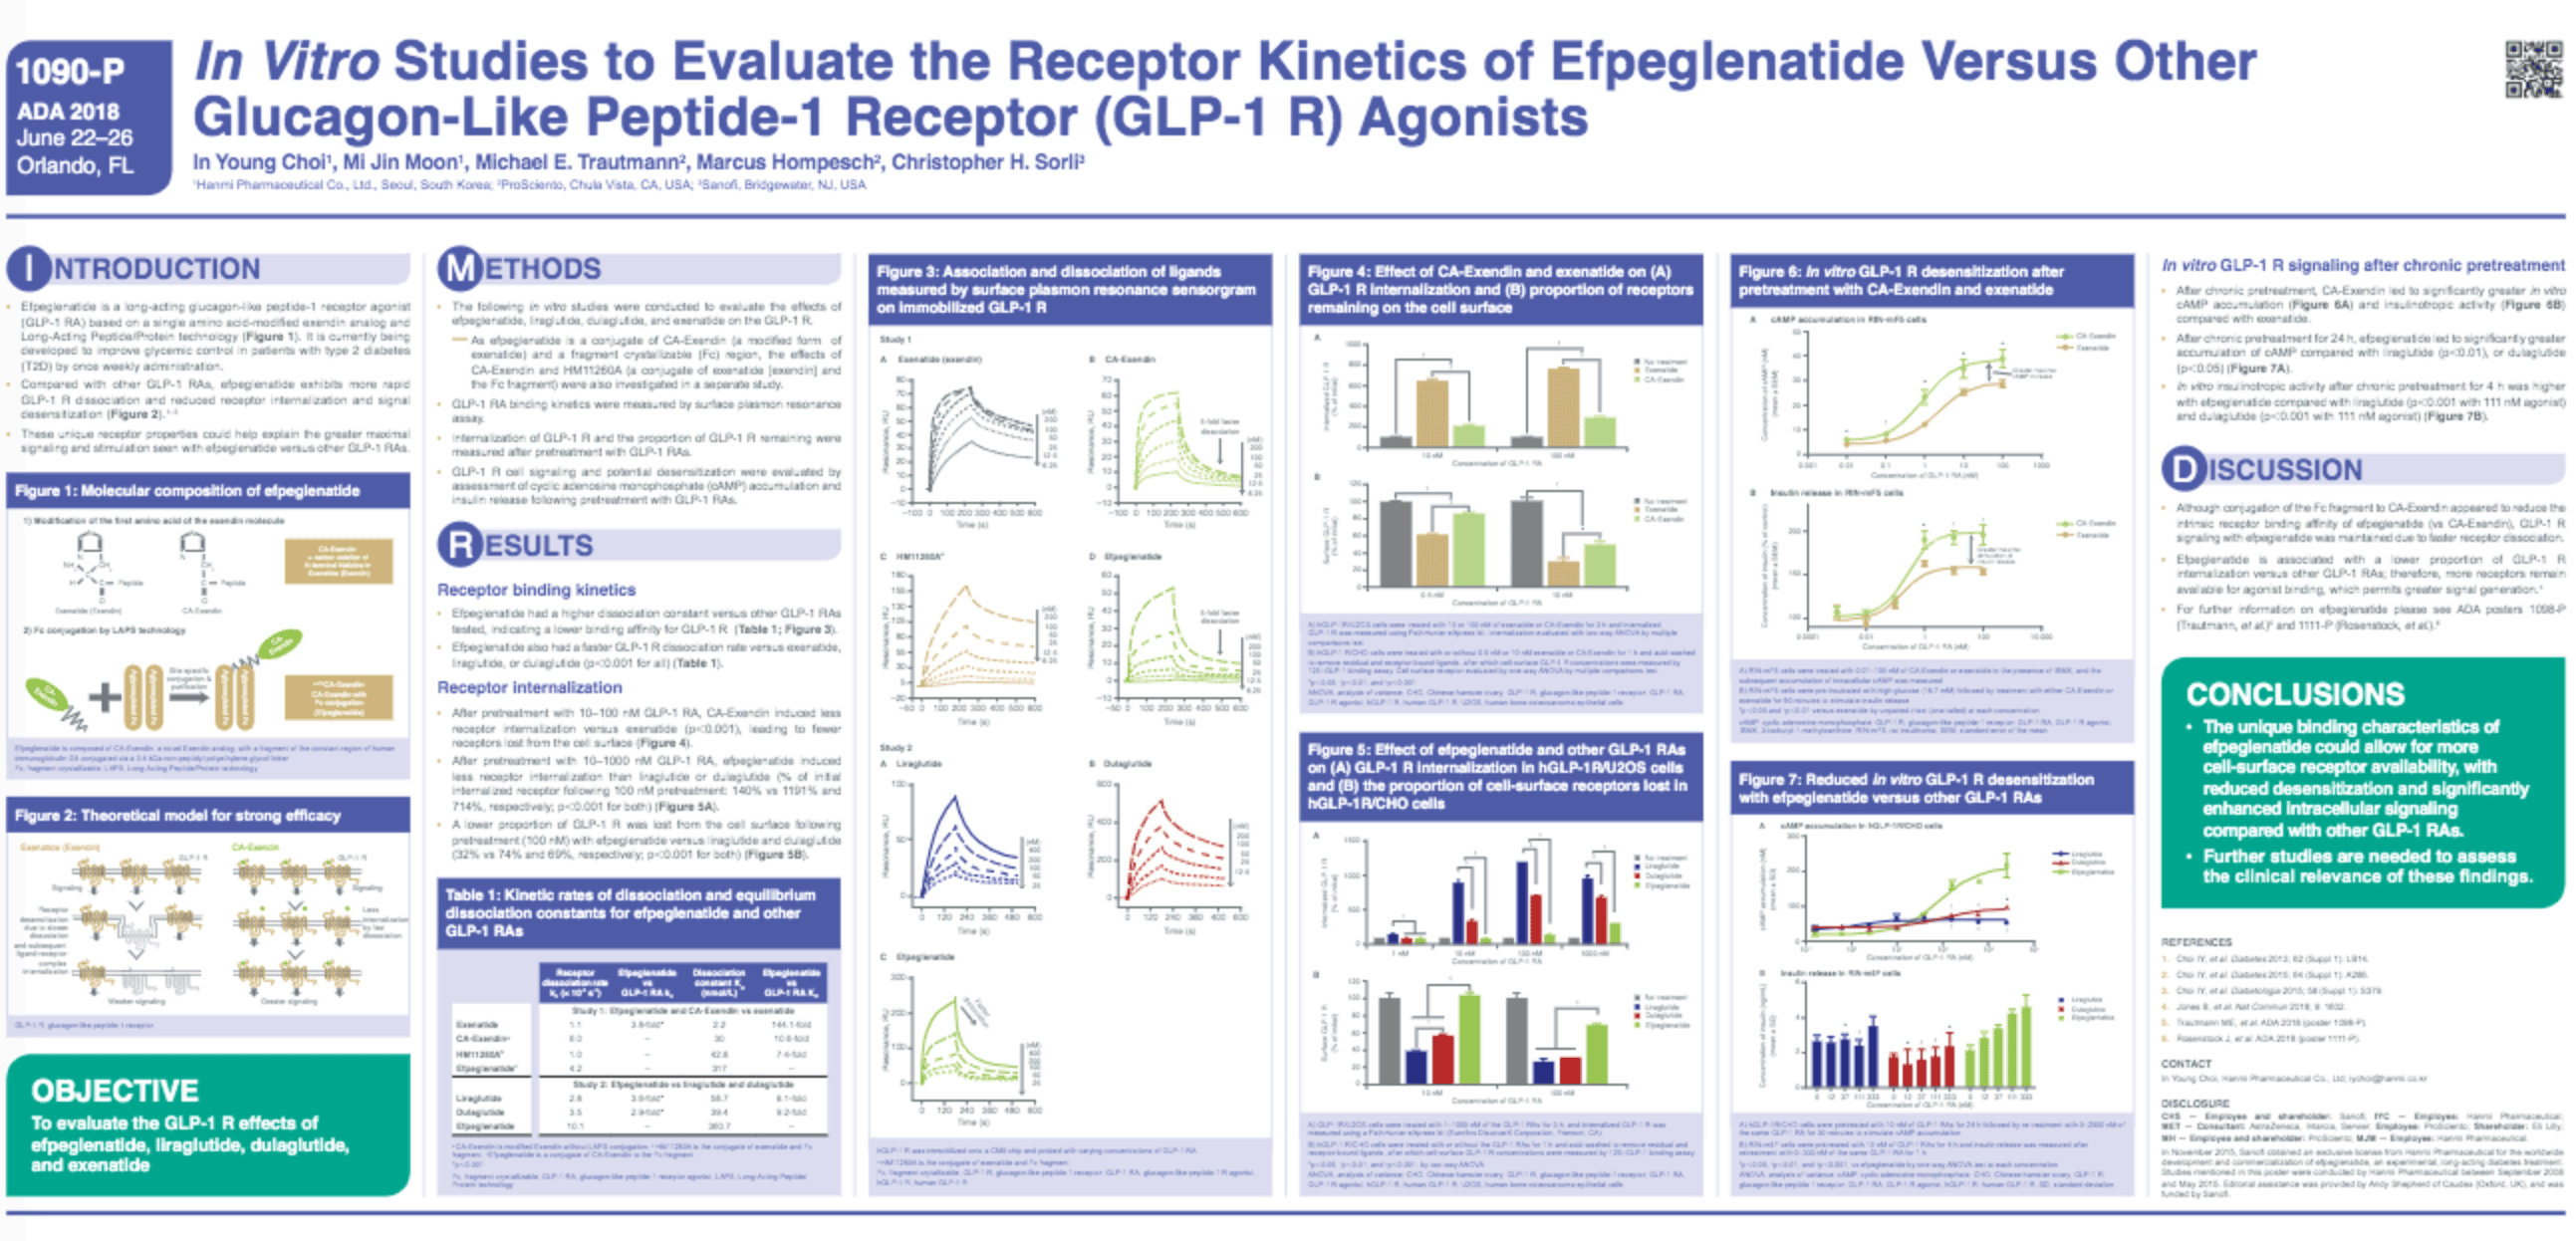 In Vitro Studies to Evaluate the Receptor Kinetics of Efpeglenatide vs. Other Glucagon-Like Peptide-1 Receptor (GLP-1R) Agonists thumbnail